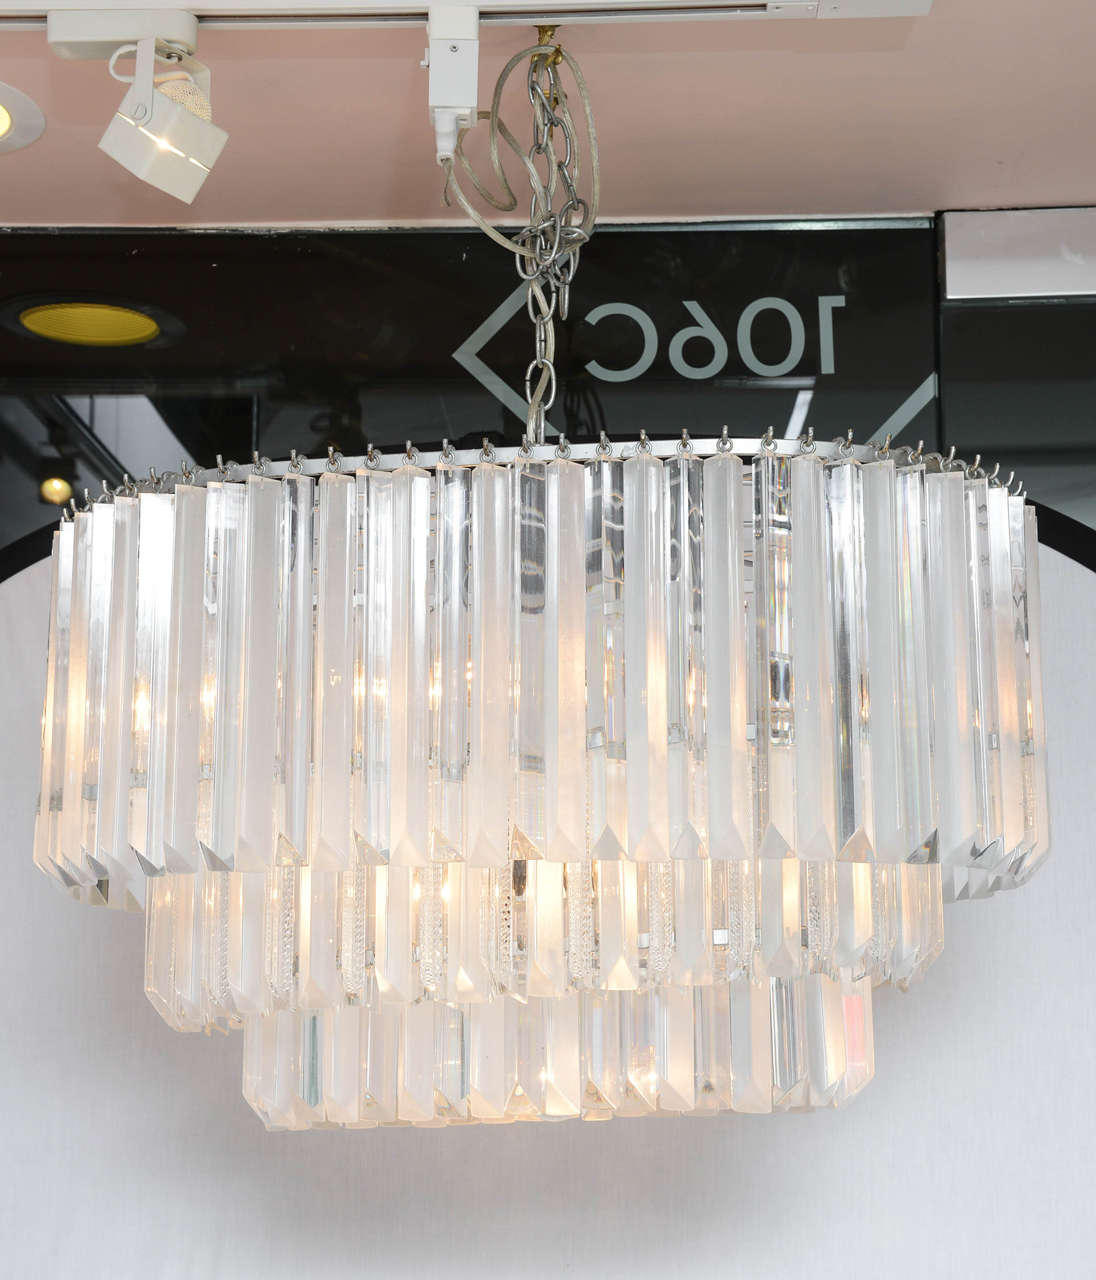 Impressive Midcentury Lucite chandelier,will brighten  any room,great light capacity if needed
11 bulbs 5+5+1